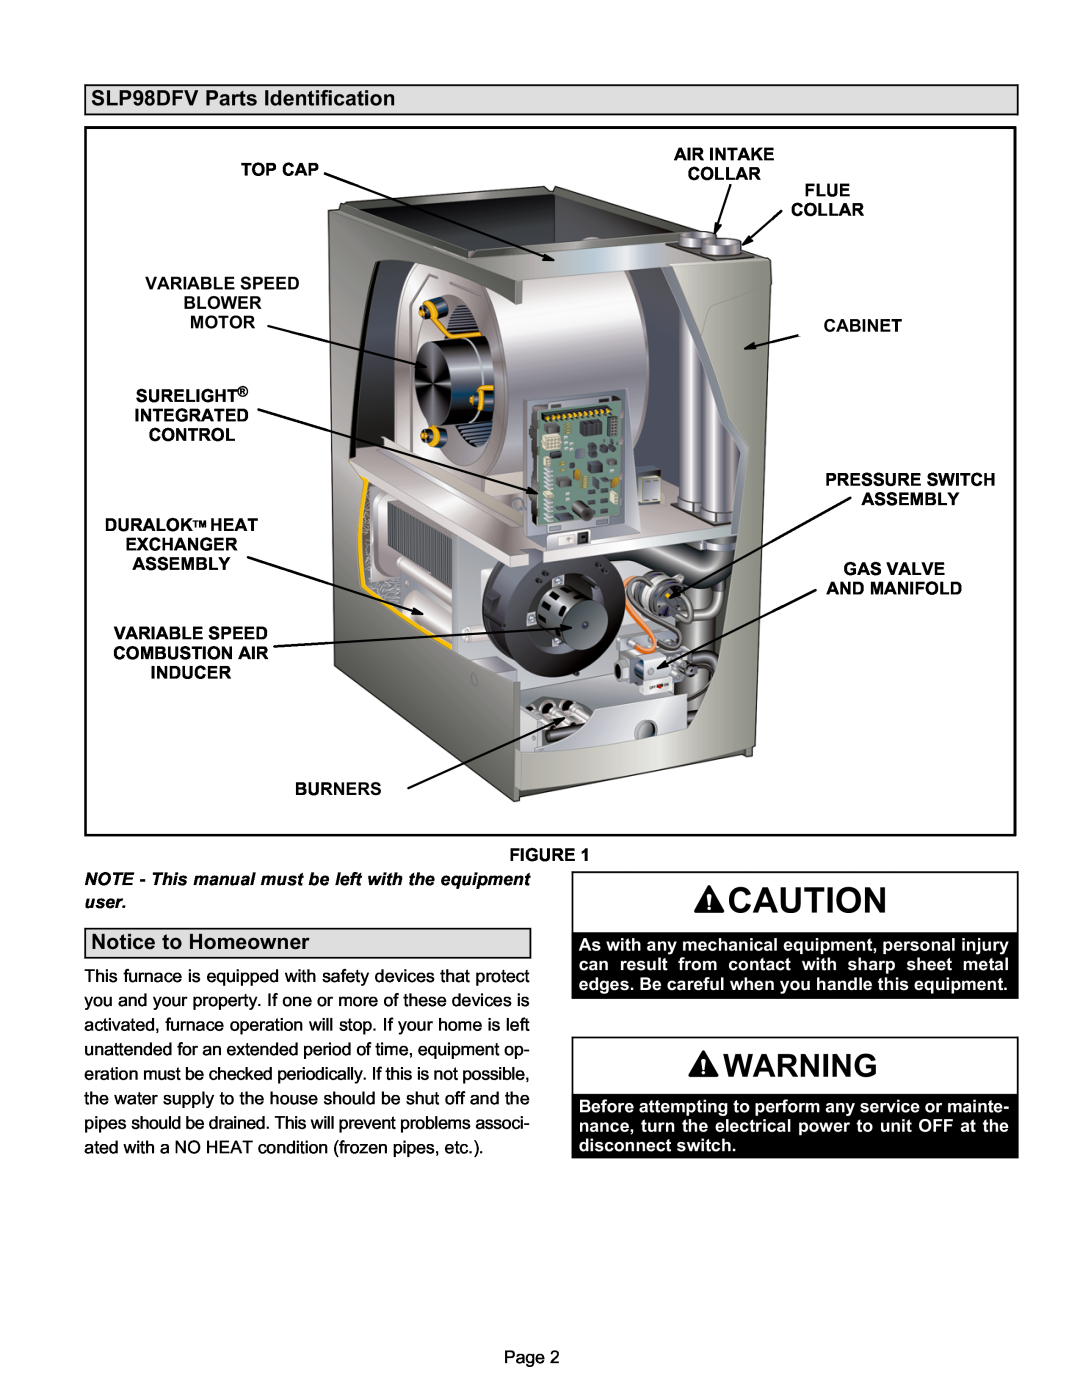 Lennox International Inc Variable Capacity Gas Furnace manual SLP98DFV Parts Identification, Notice to Homeowner 